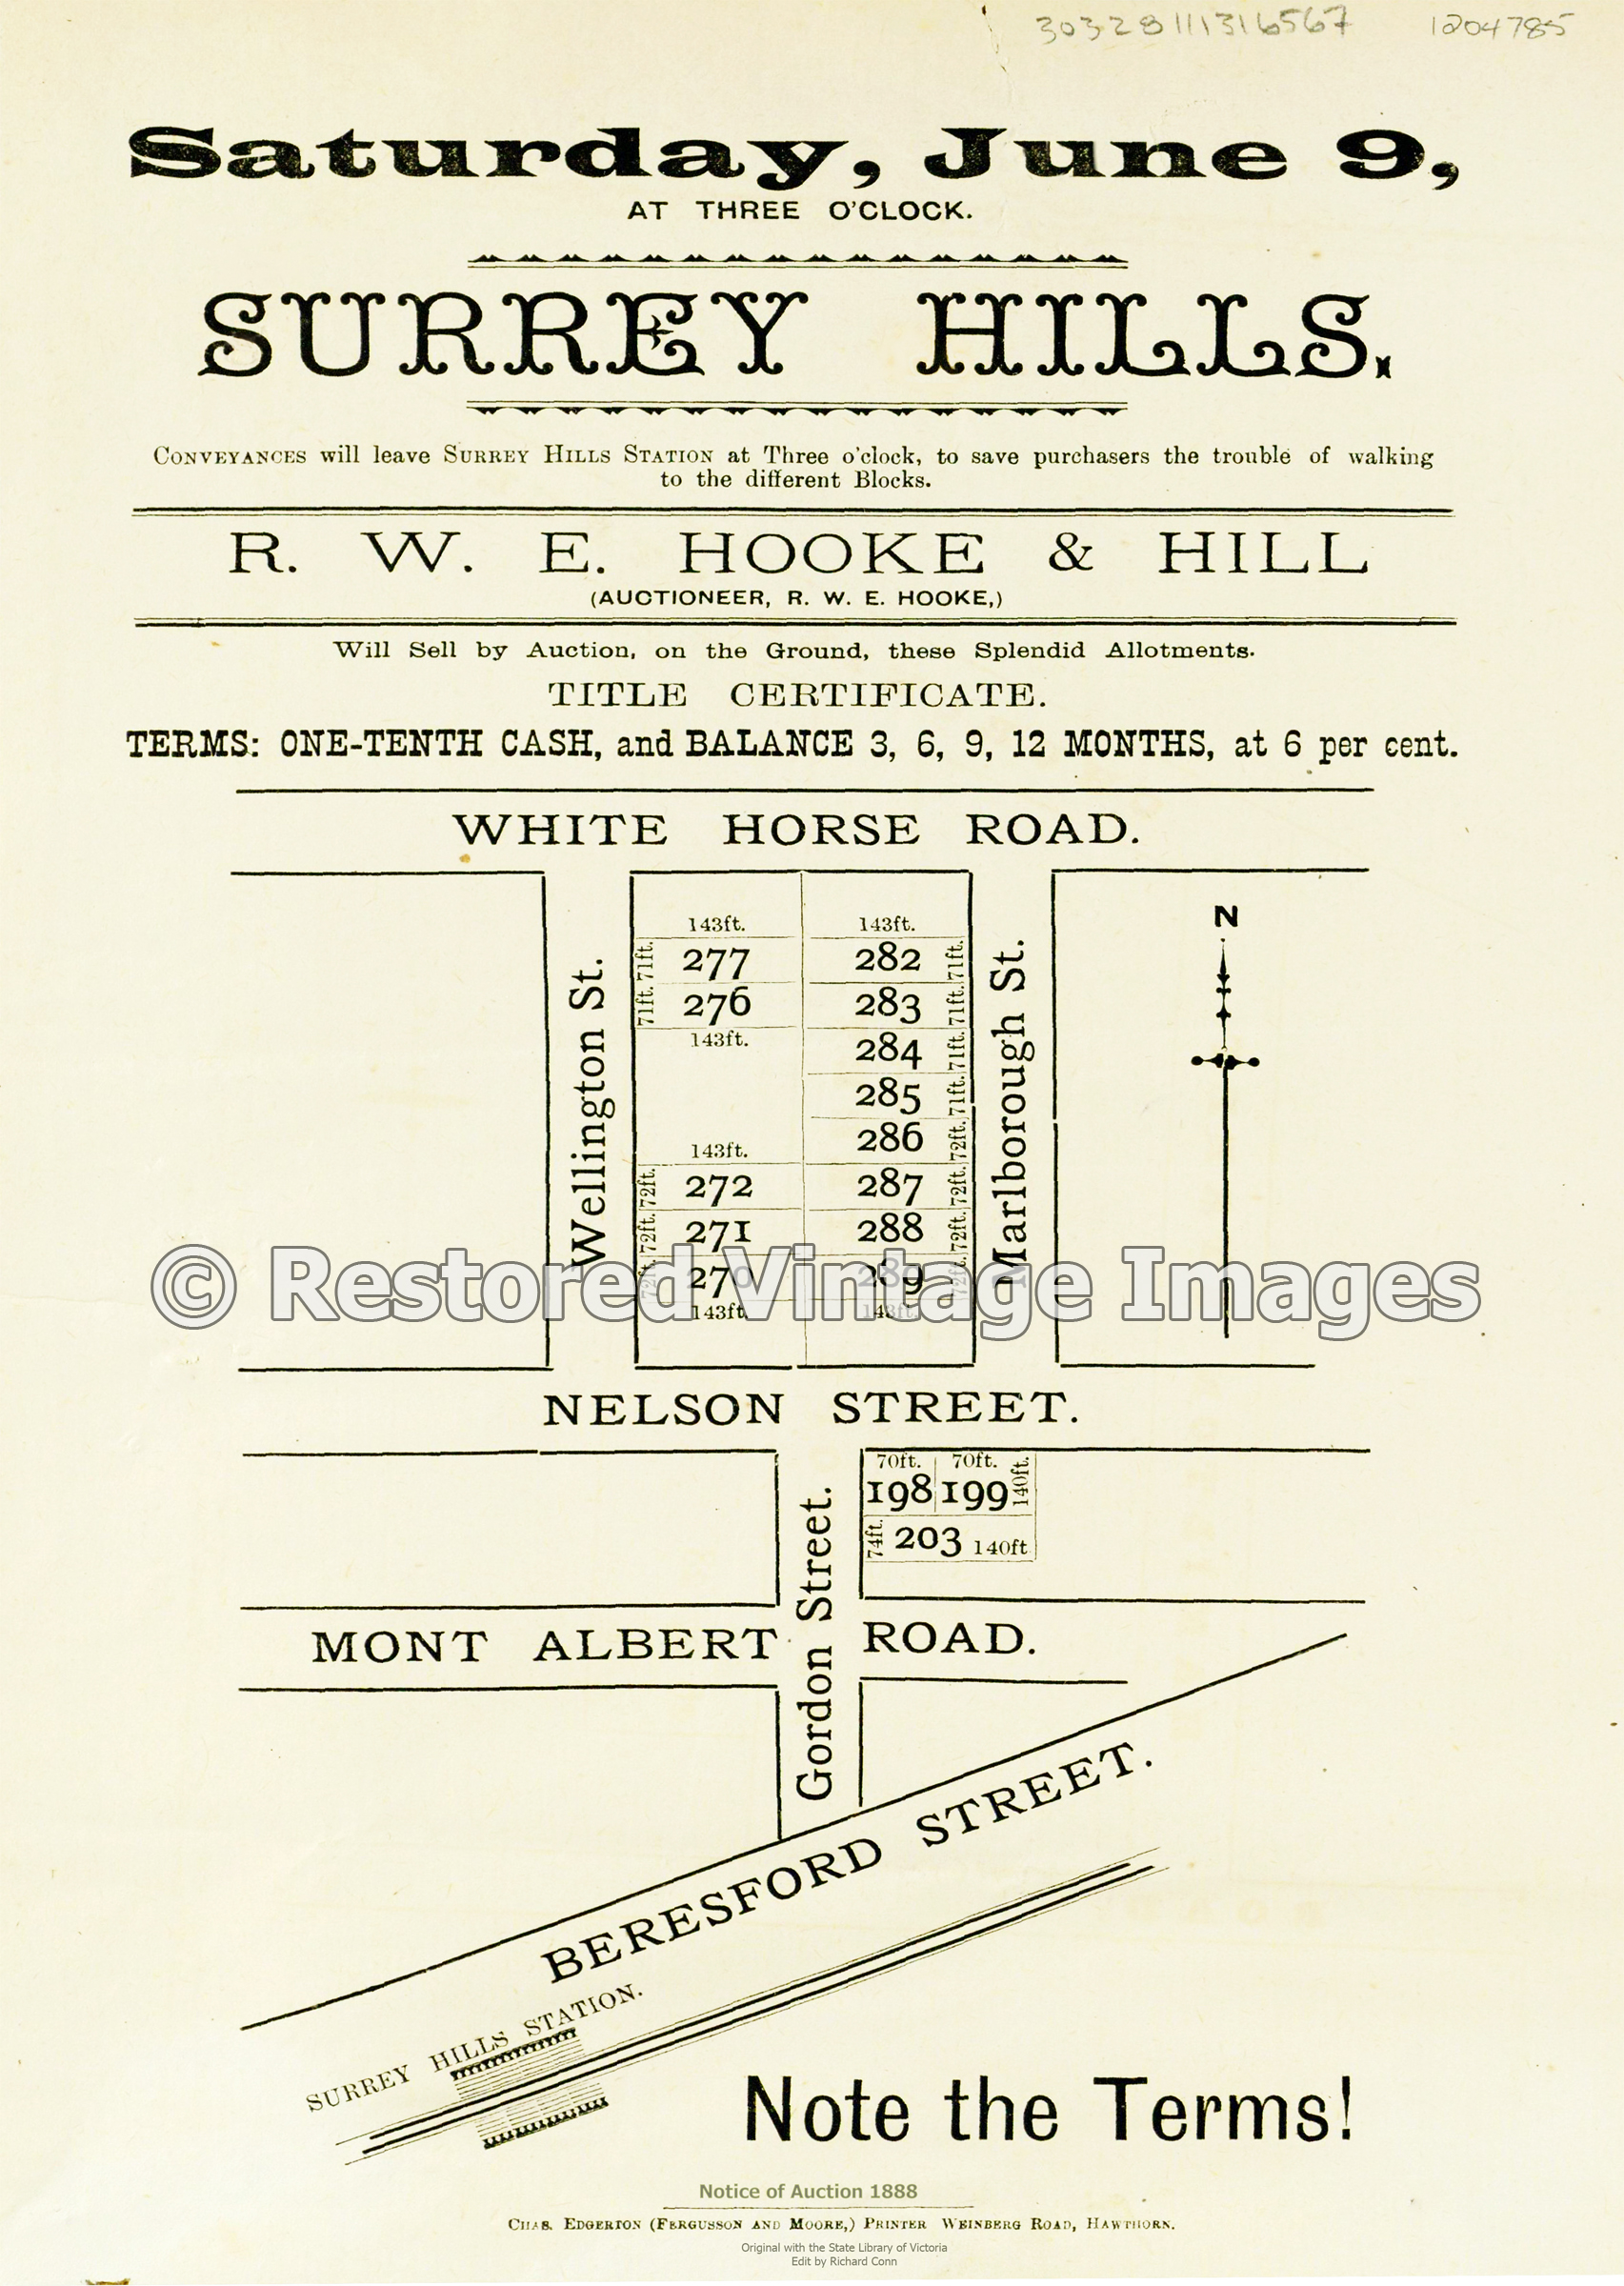 Surrey Hills Auction 1888 – Mont Albert